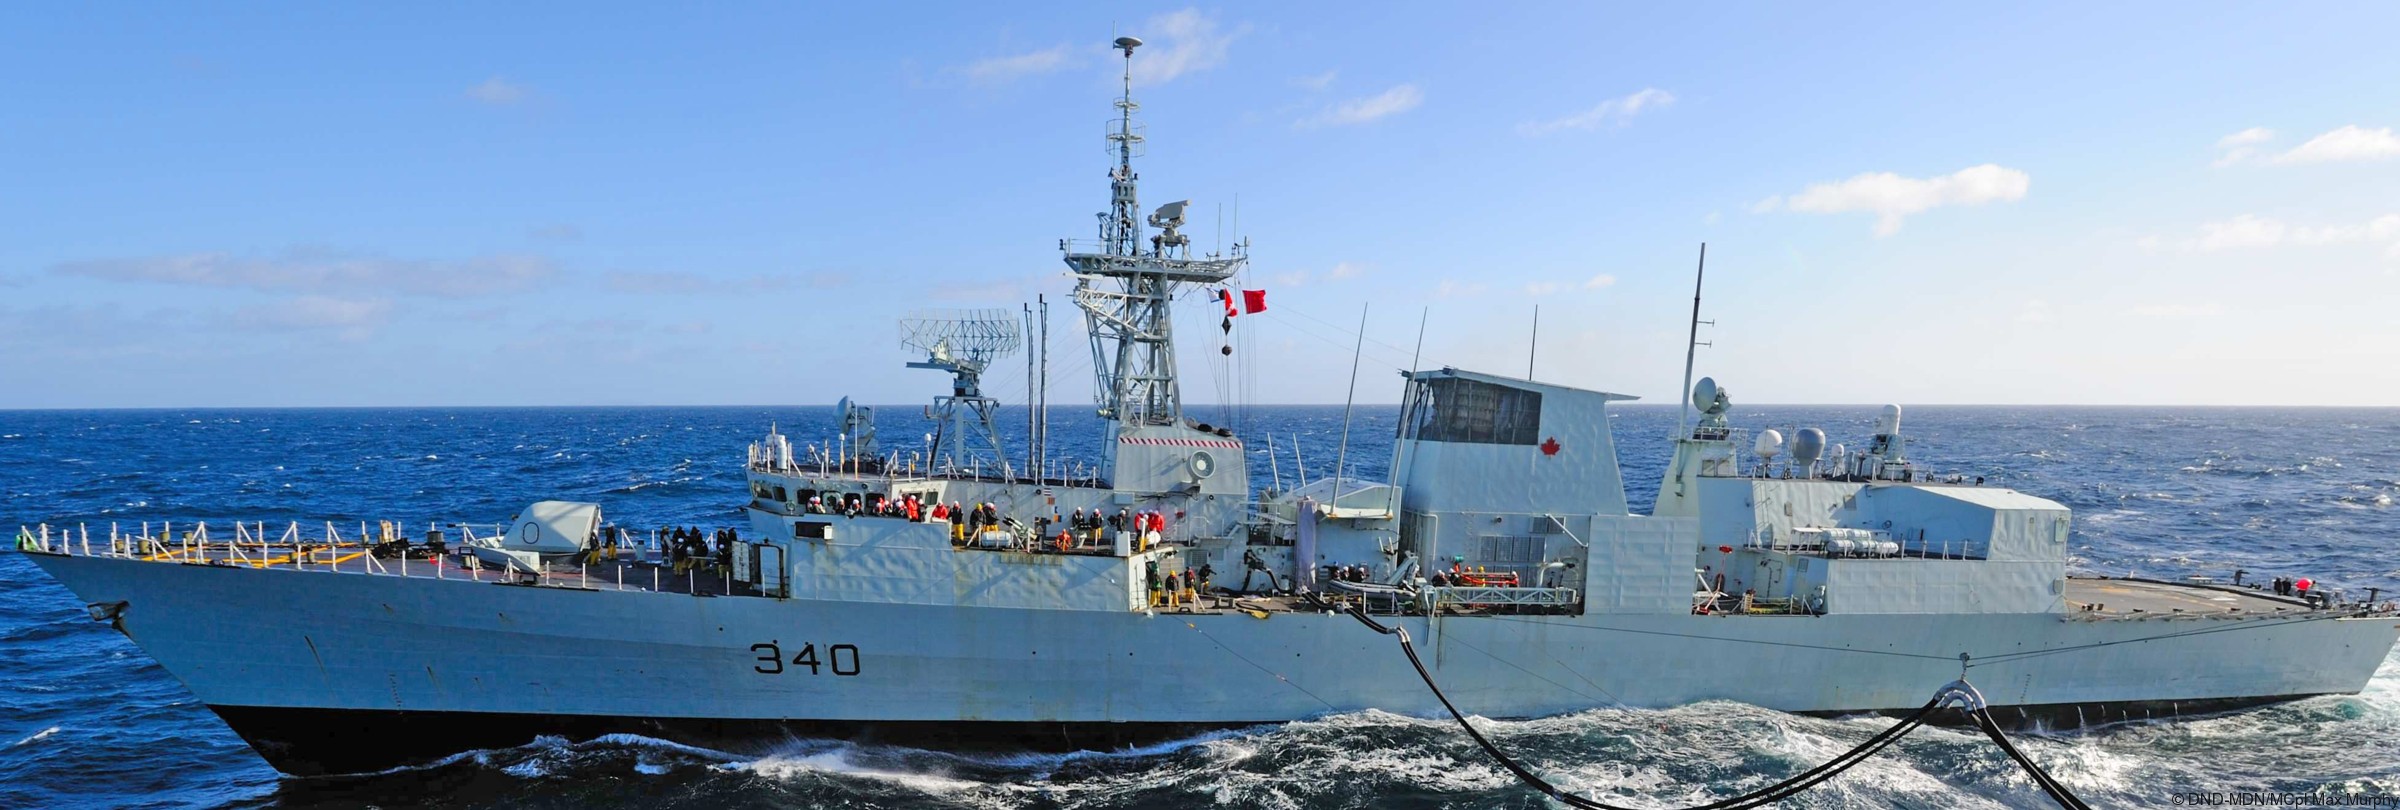 ffh-340 hmcs st. john's halifax class helicopter patrol frigate ncsm royal canadian navy 05